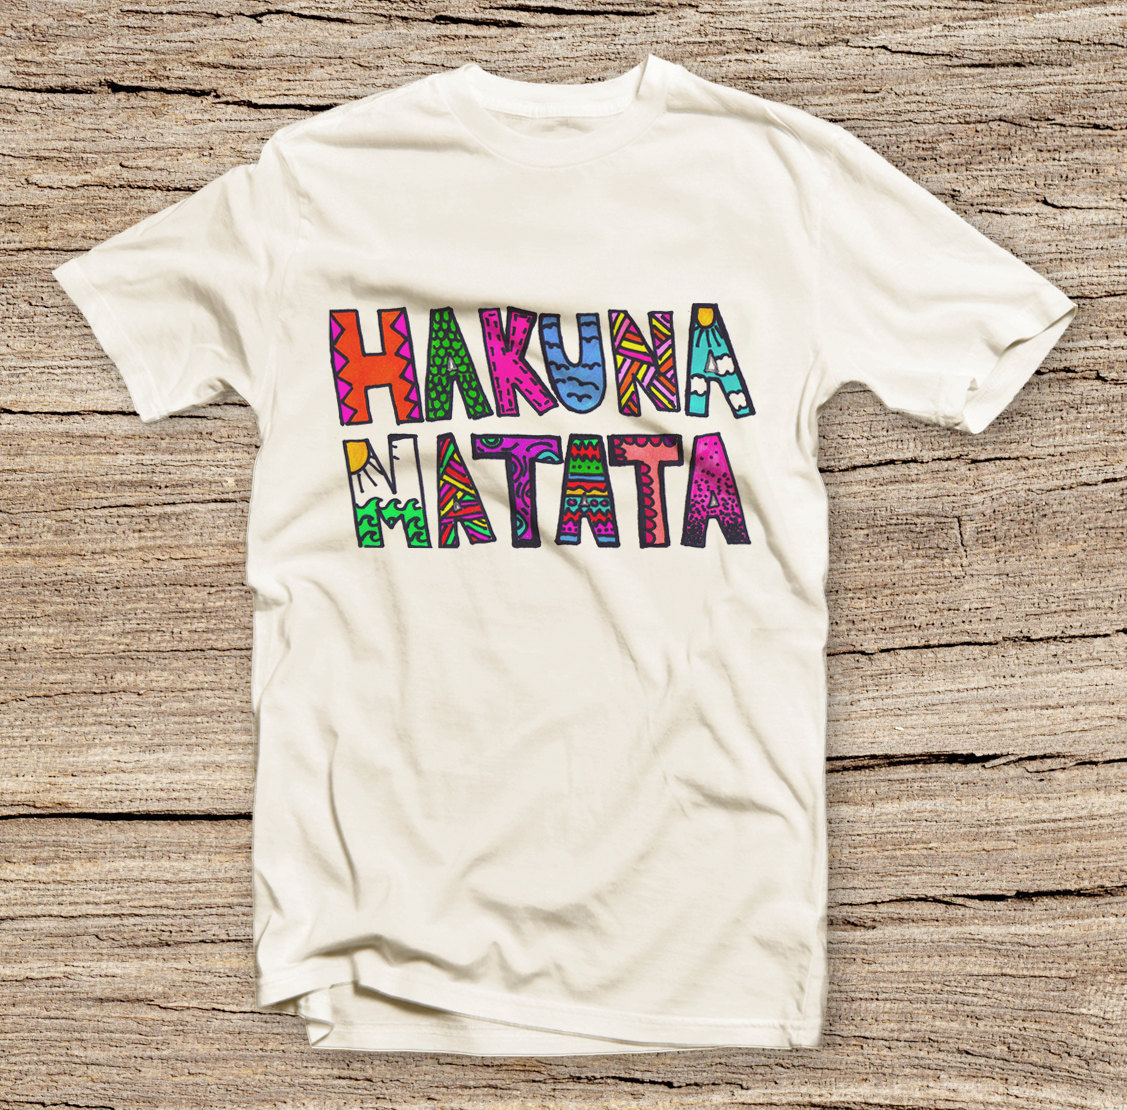 Pts-163 Hakuna Matata Style T-shirt, Colorful Pattern T-shirt Funny Humor T-shirt, Text Slogan, Unisex Tee, Fashion Printed T-shirt